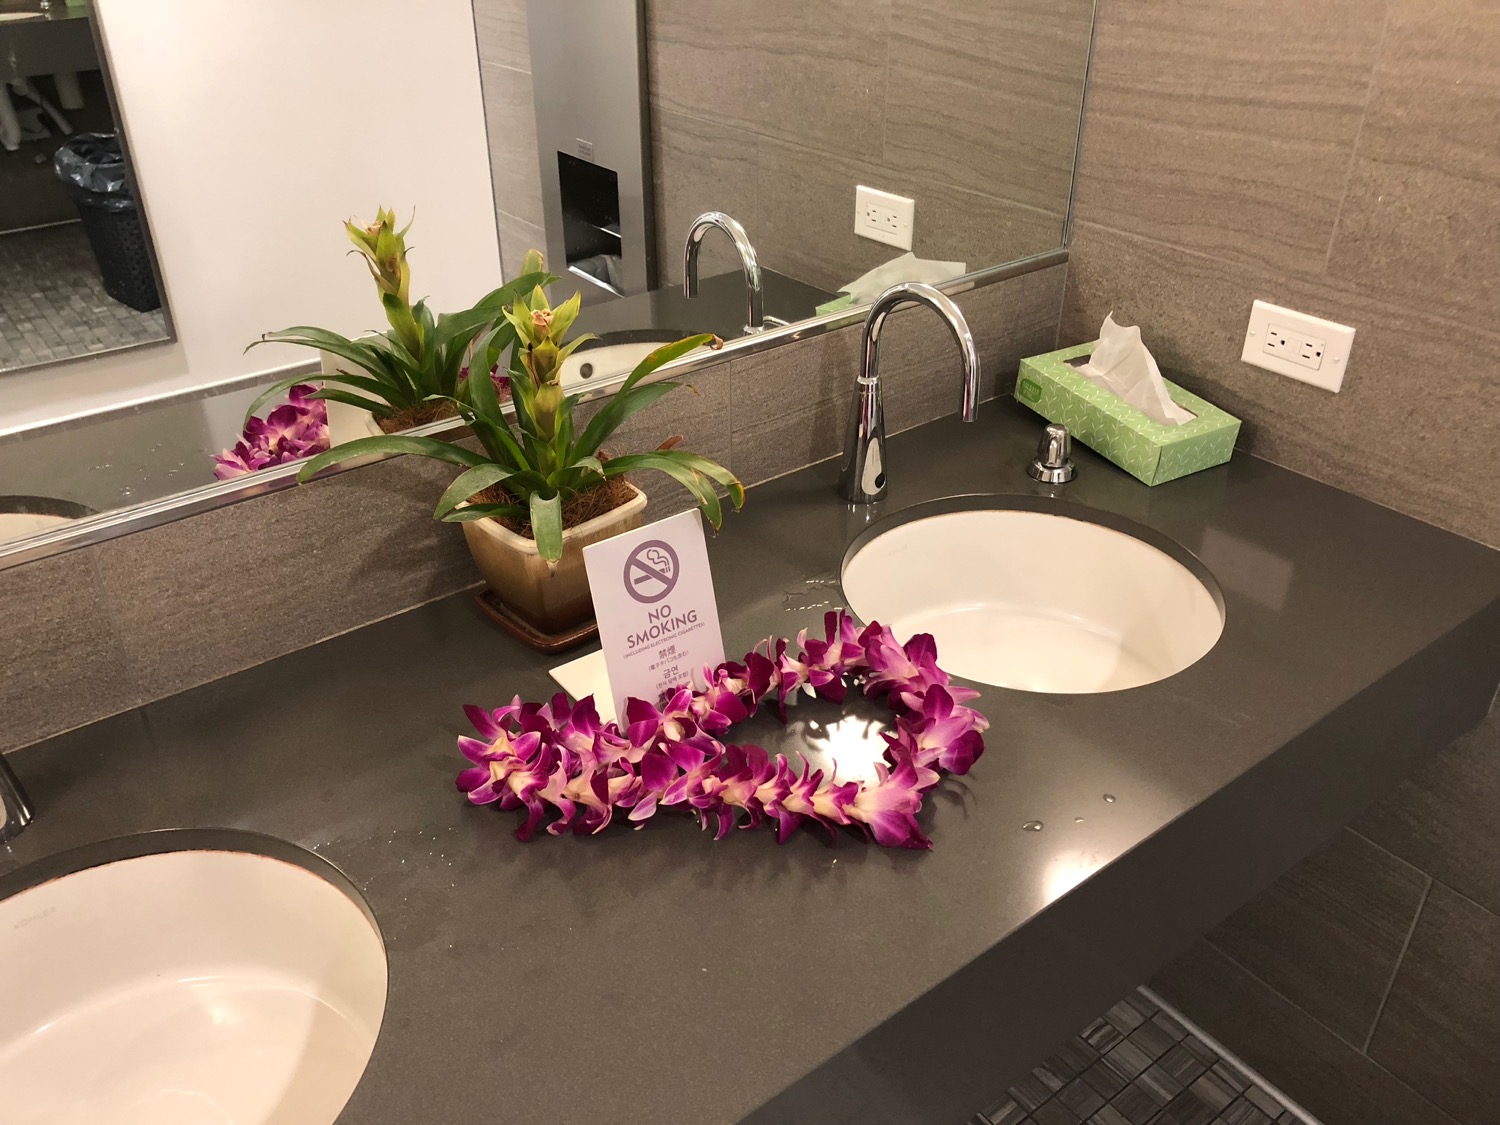 a bathroom sink with purple flower garland on it